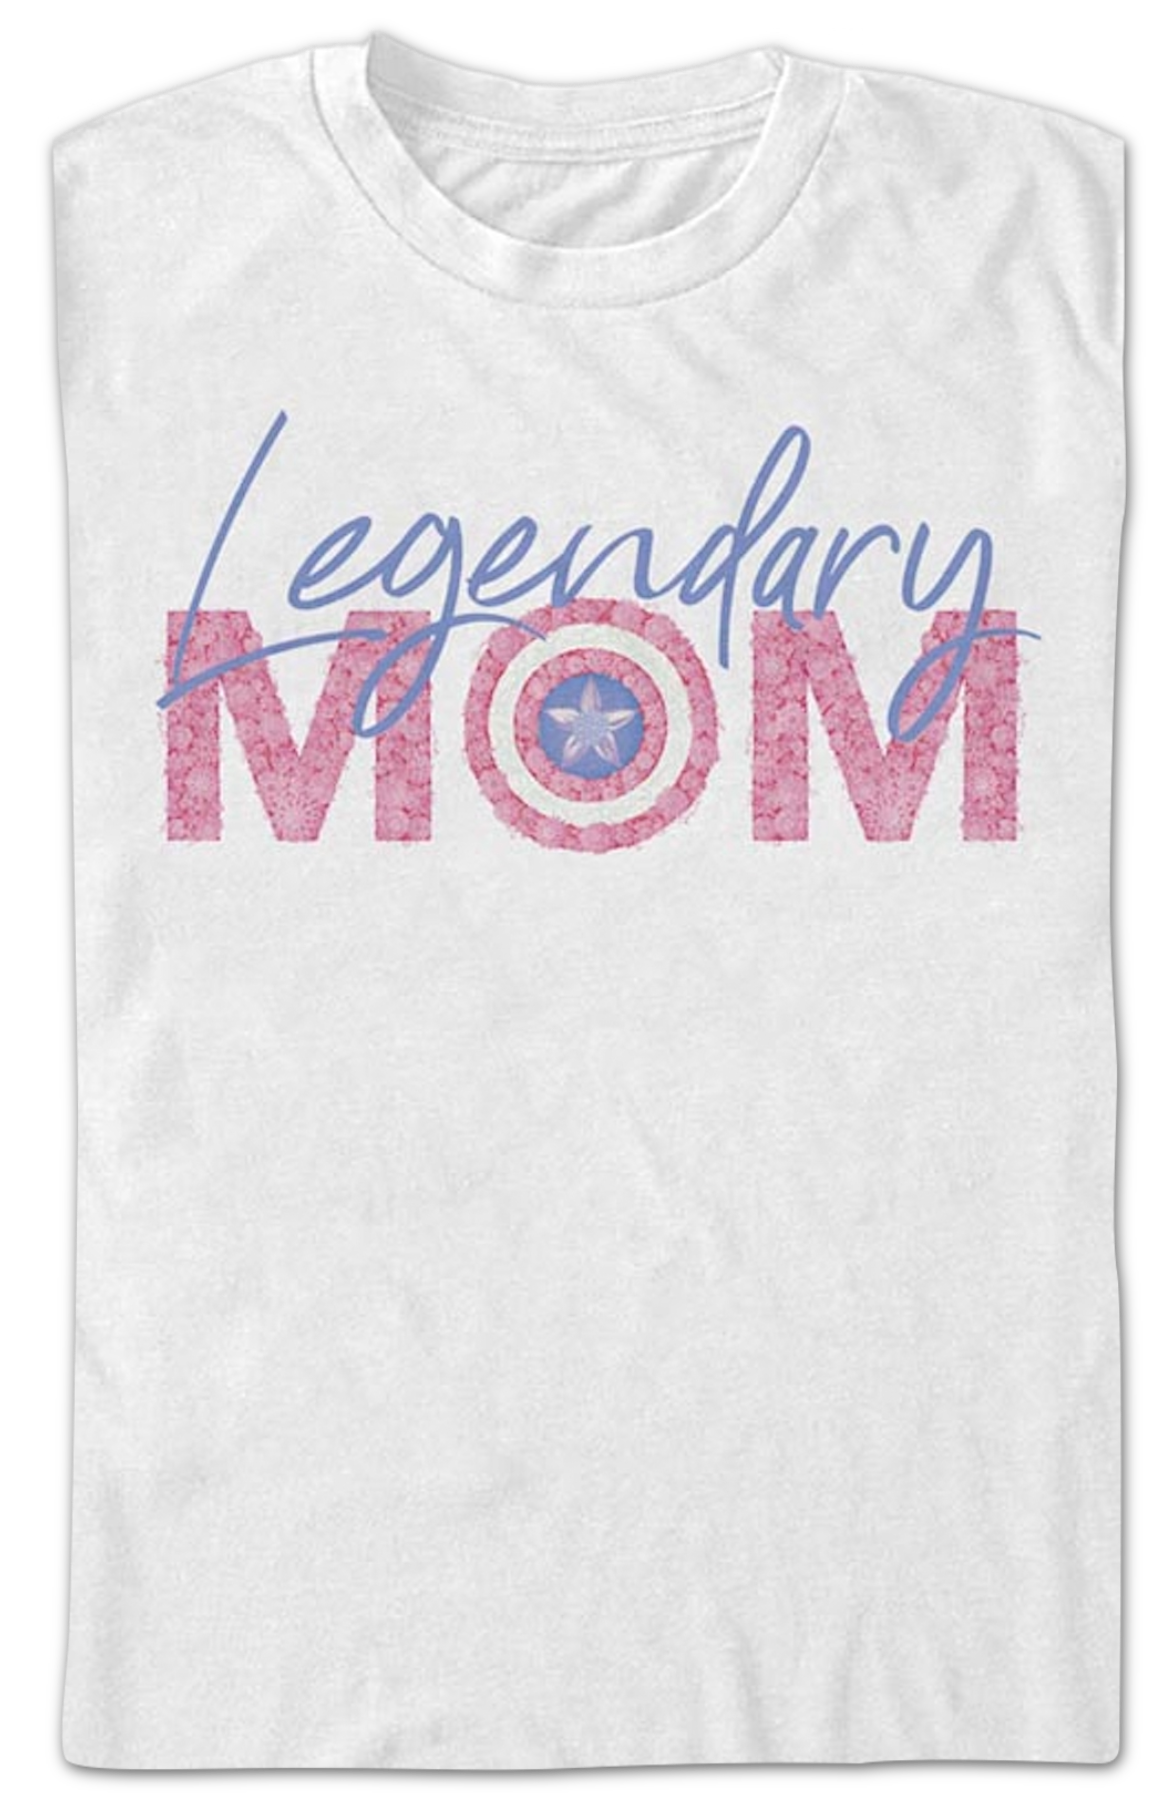 Legendary Mom Marvel Comics T-Shirt